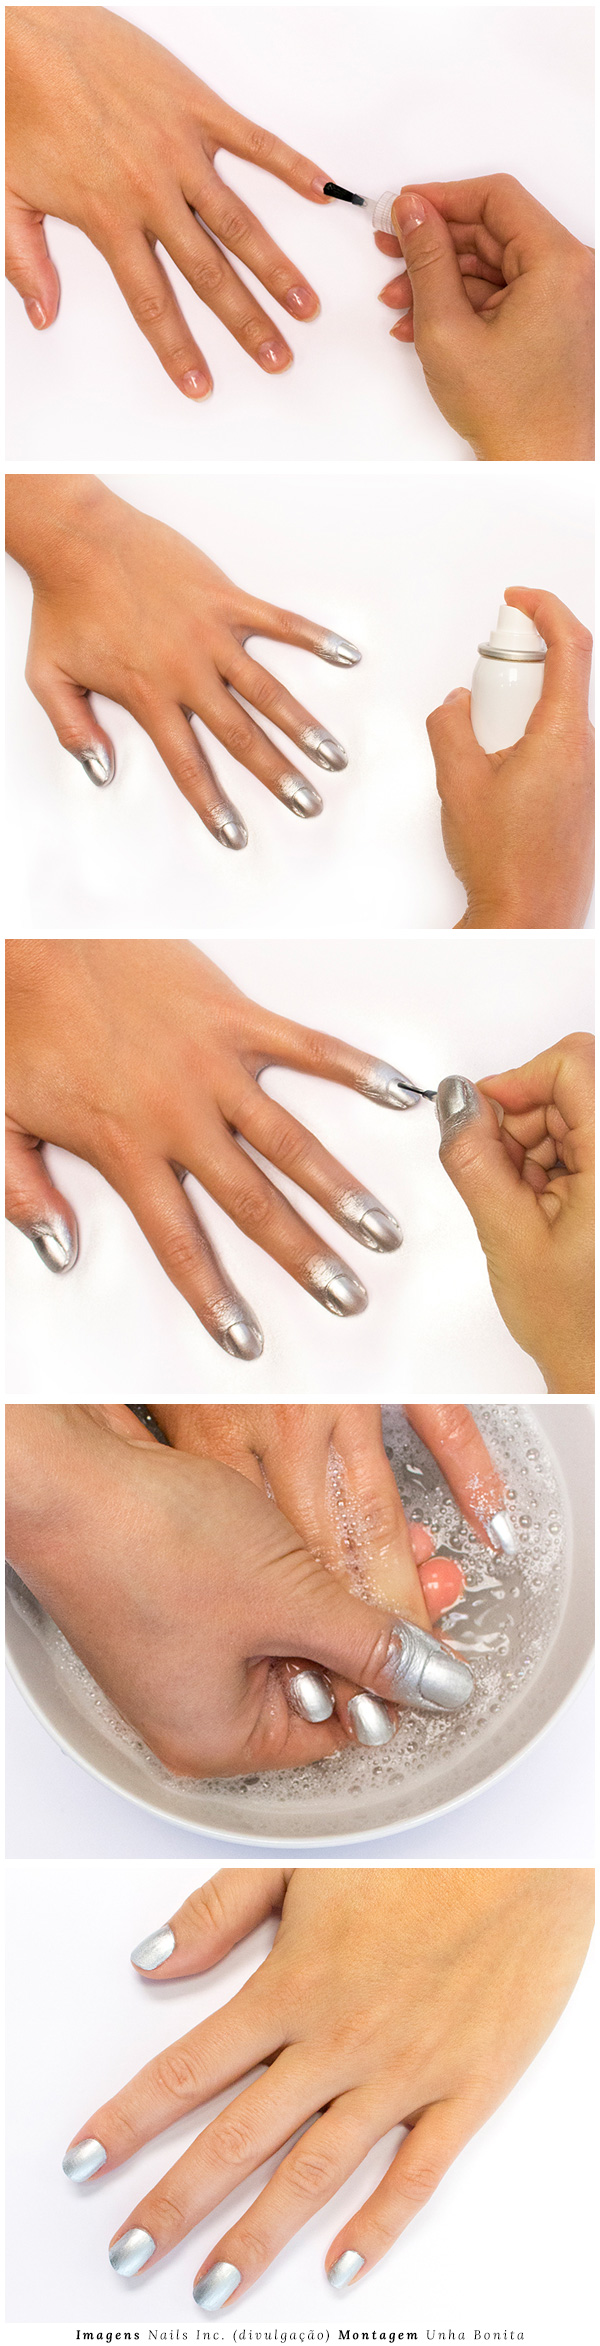 esmalte-spray-paint-can-nails-inc-como-aplicar